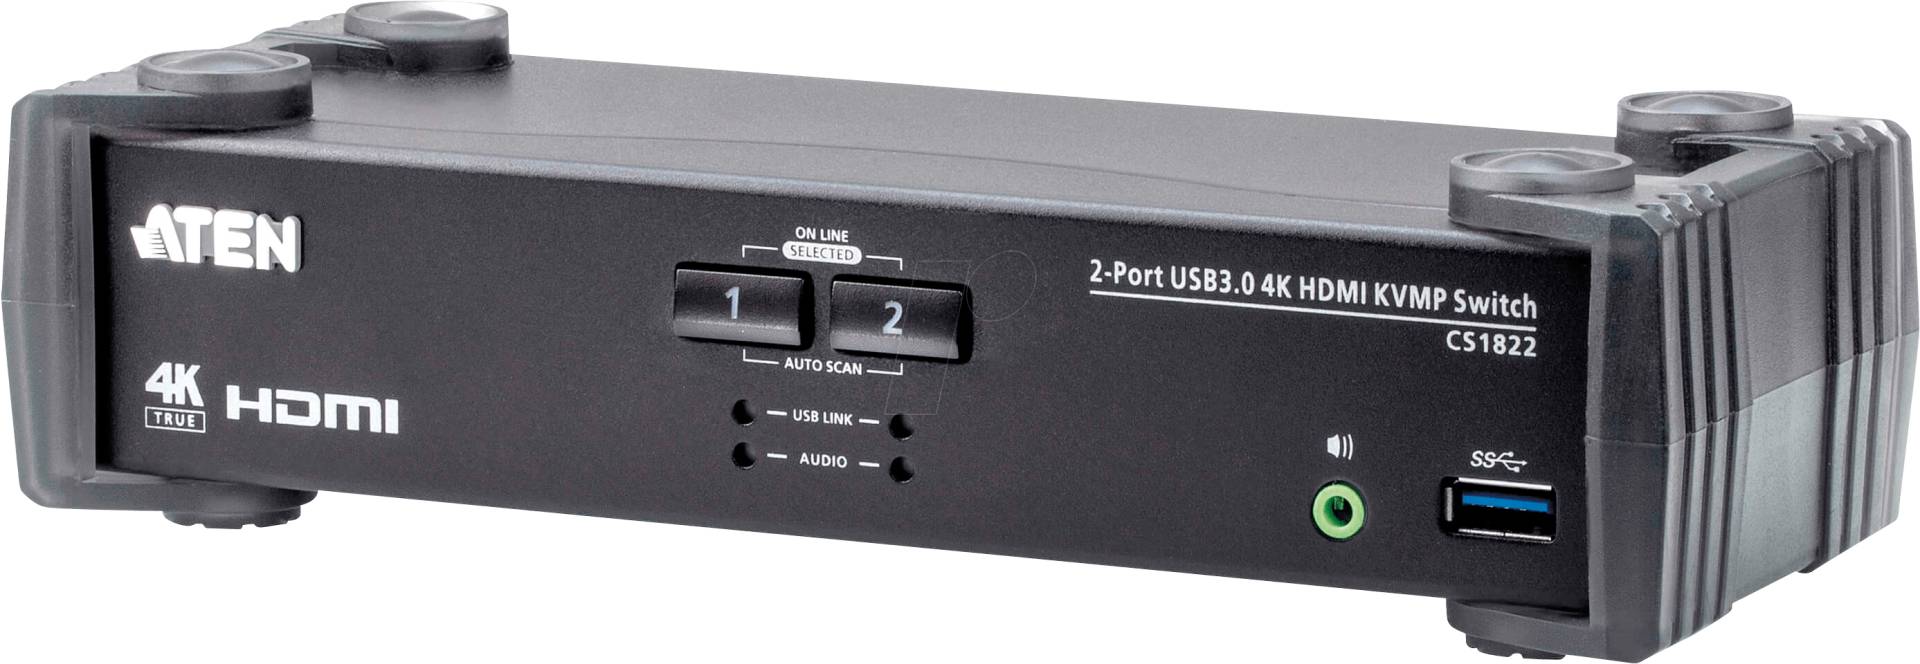 ATEN CS1822 - 2-Port KVM Switch, USB, HDMI, Audio von Aten